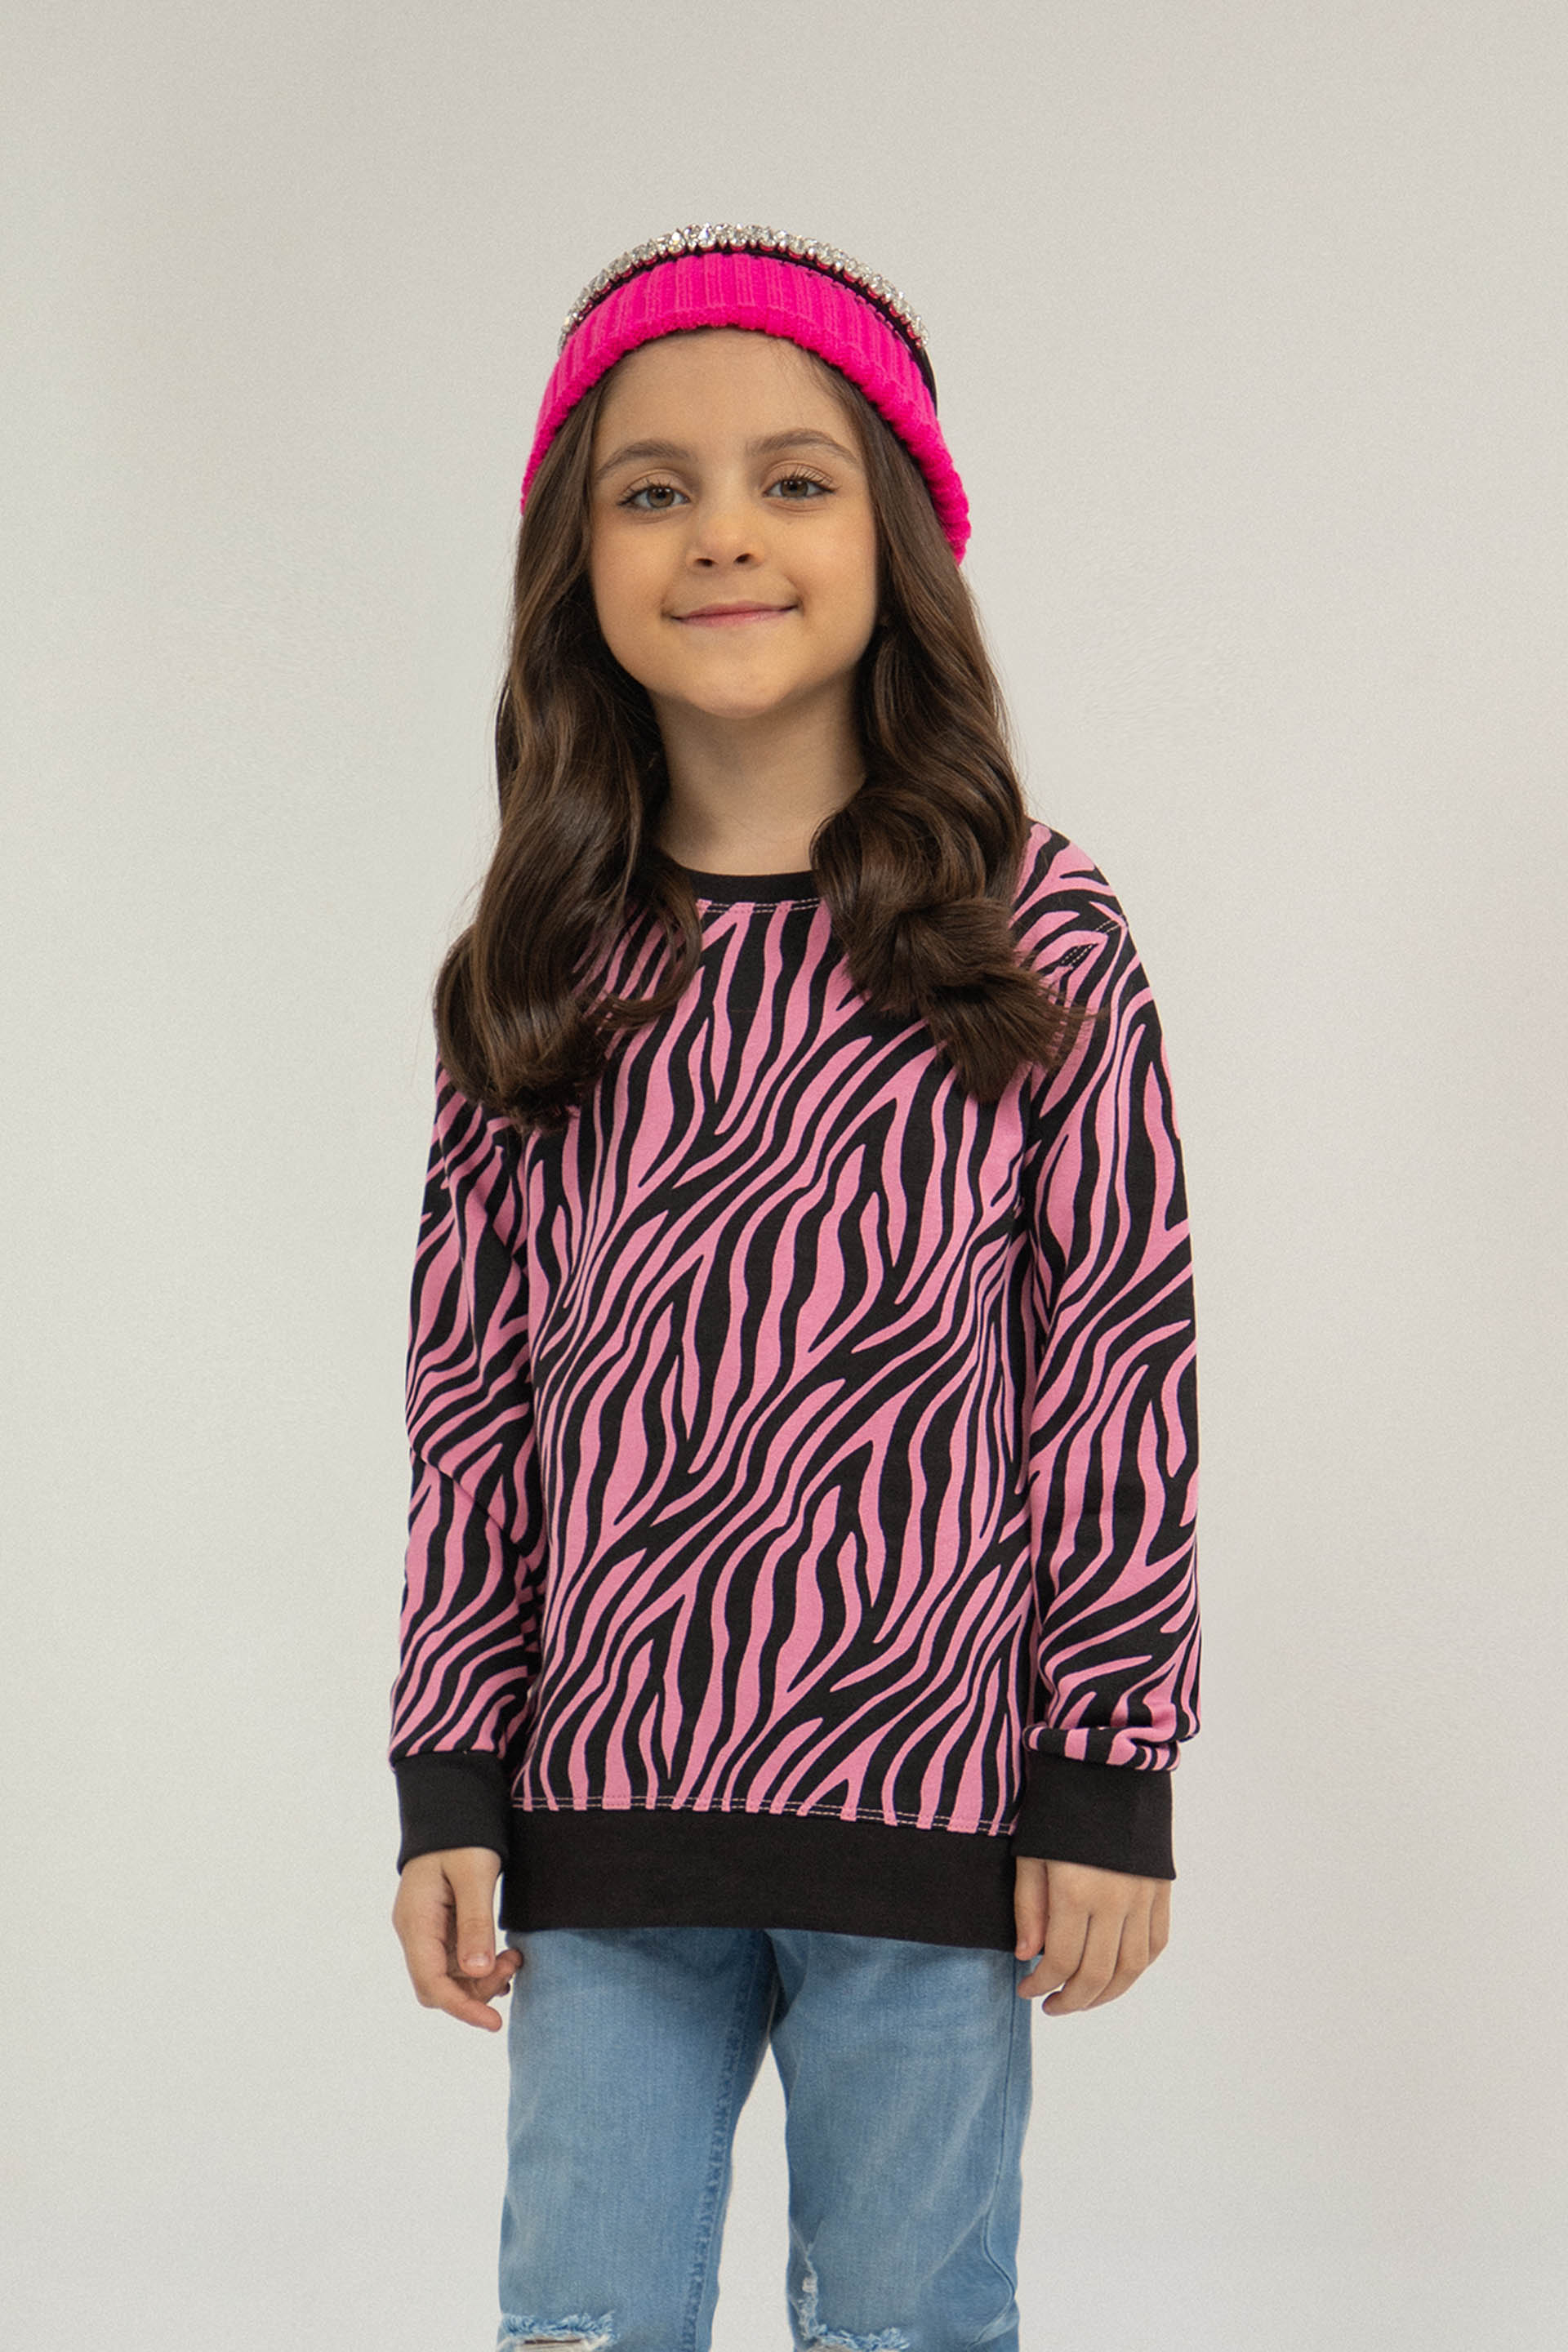 Zebra Sweatshirt Pink/Black